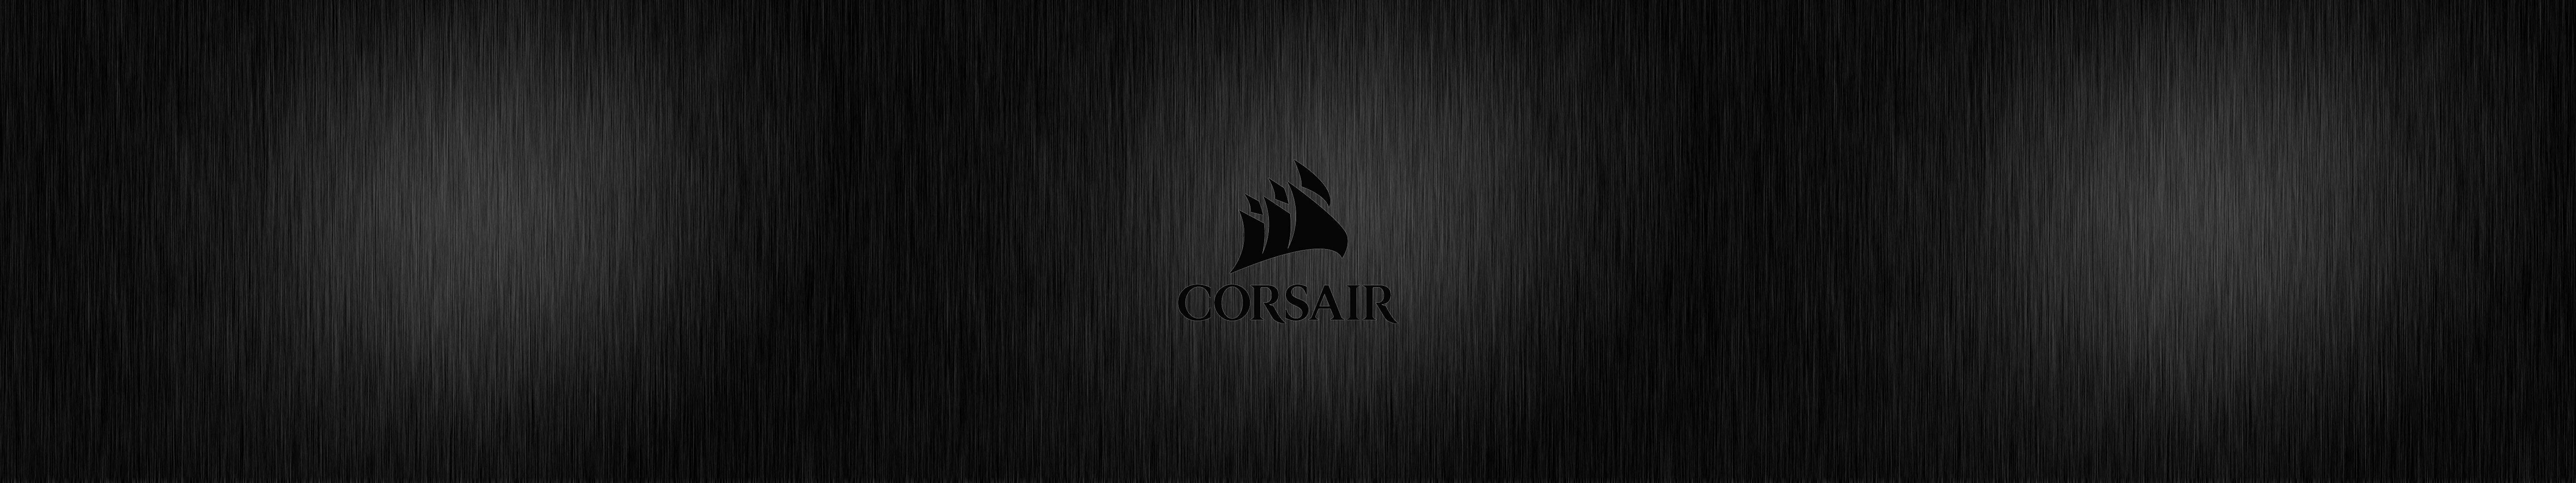 Black Corsair Triple Screen Background